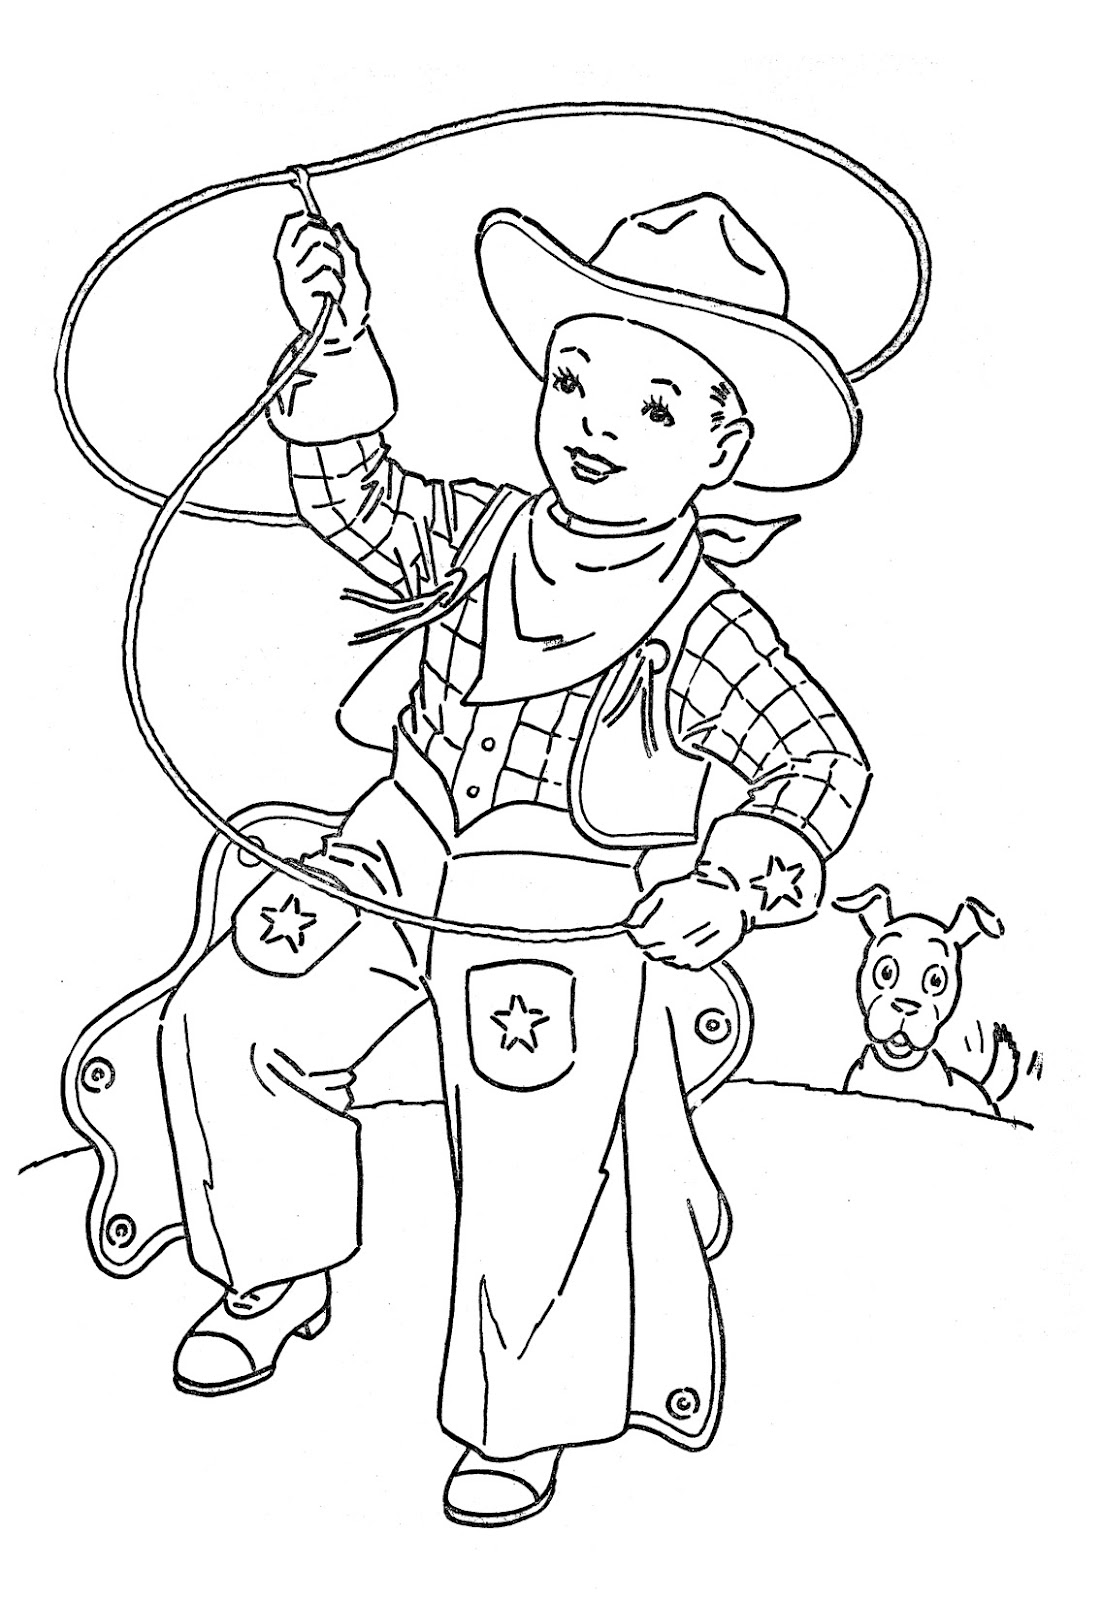 Dibujo para colorear: Cowboy (Personajes) #91551 - Dibujos para Colorear e Imprimir Gratis